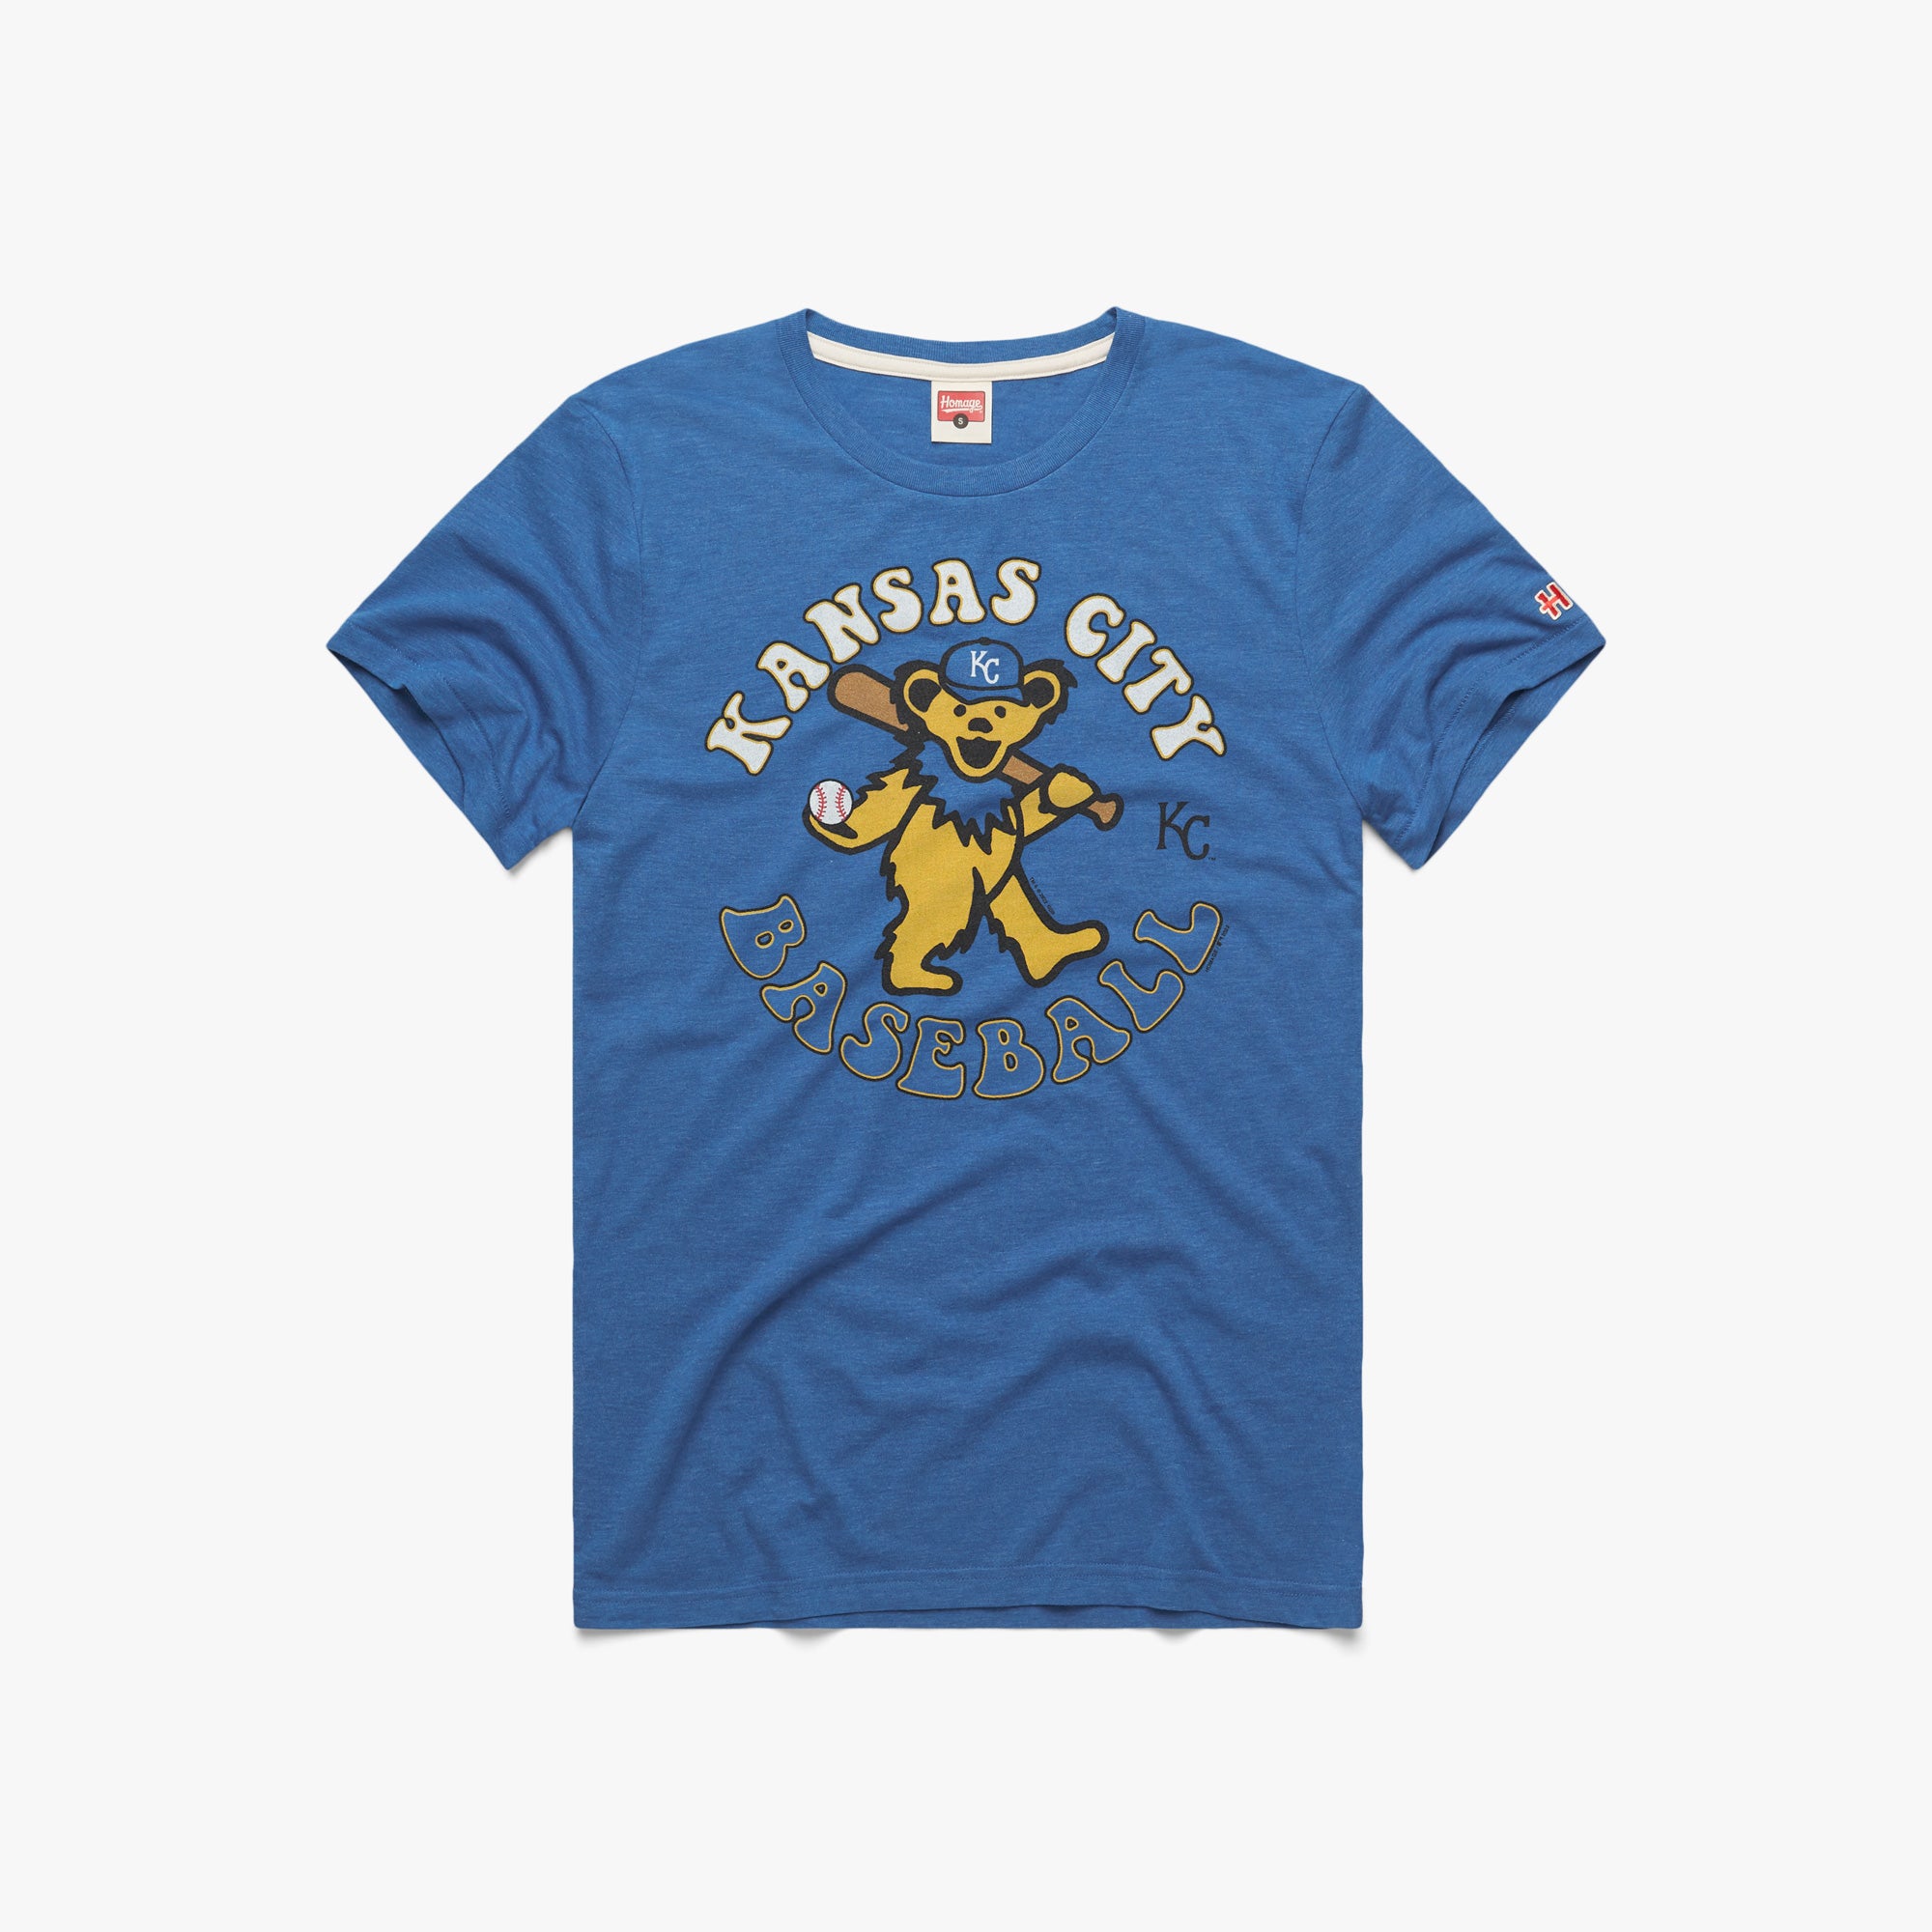 MLB Kansas City Royals Grateful Dead Hawaiian Shirt - Tagotee